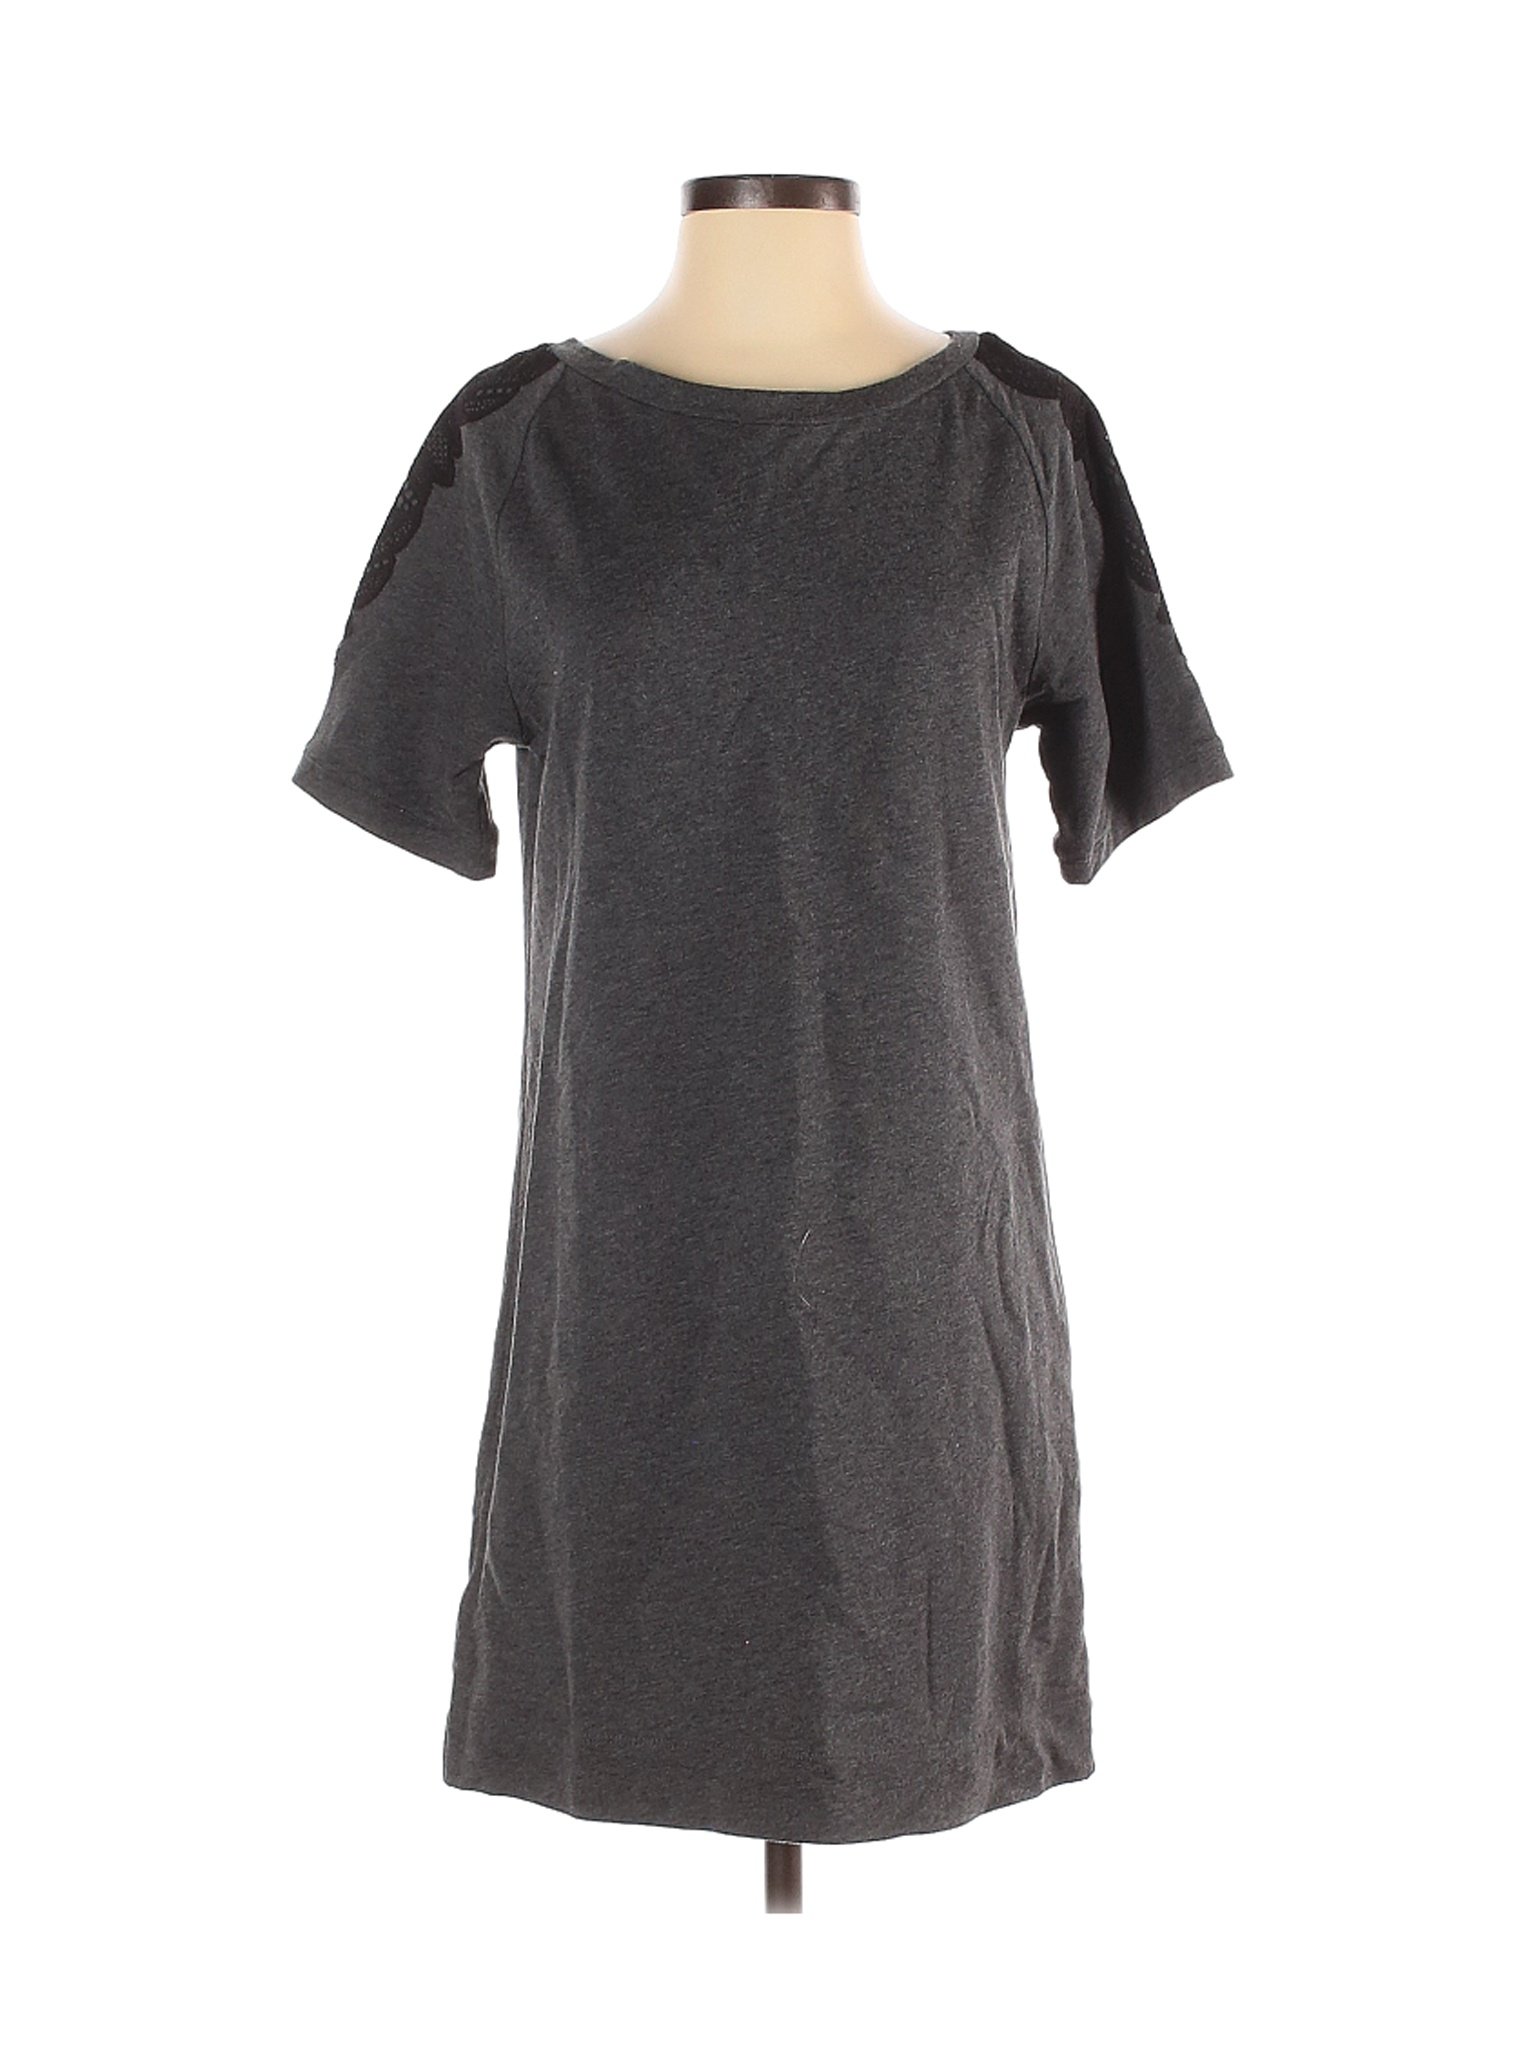 NWT Ann Taylor LOFT Women Gray Casual Dress S | eBay